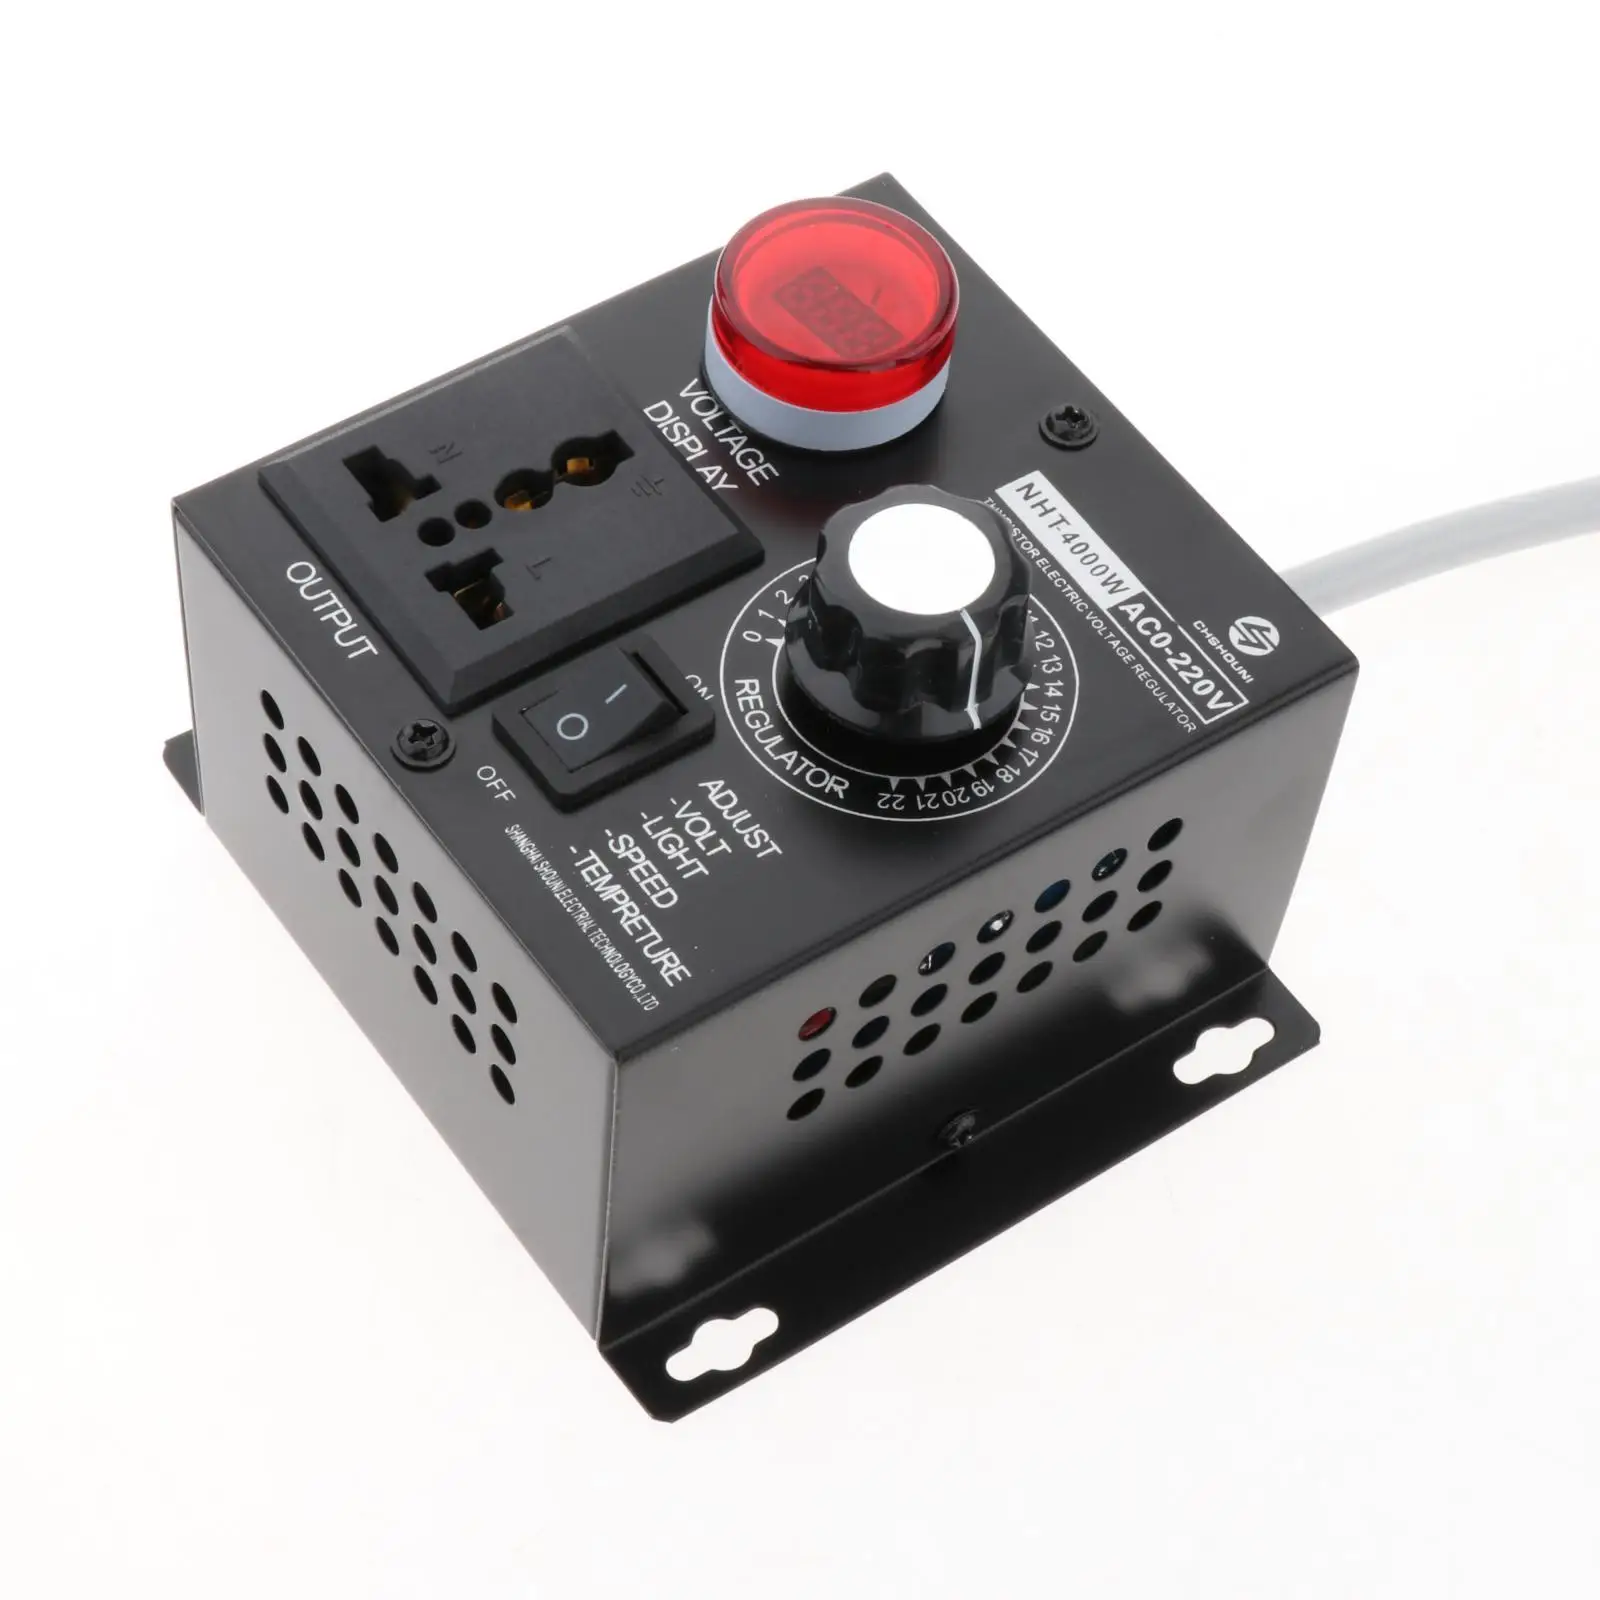 SCR Dimmer Portable Speed Temperature Light Voltage Adjustable Regulator 220V 4000W Compact Variable Voltage Controller US Plug